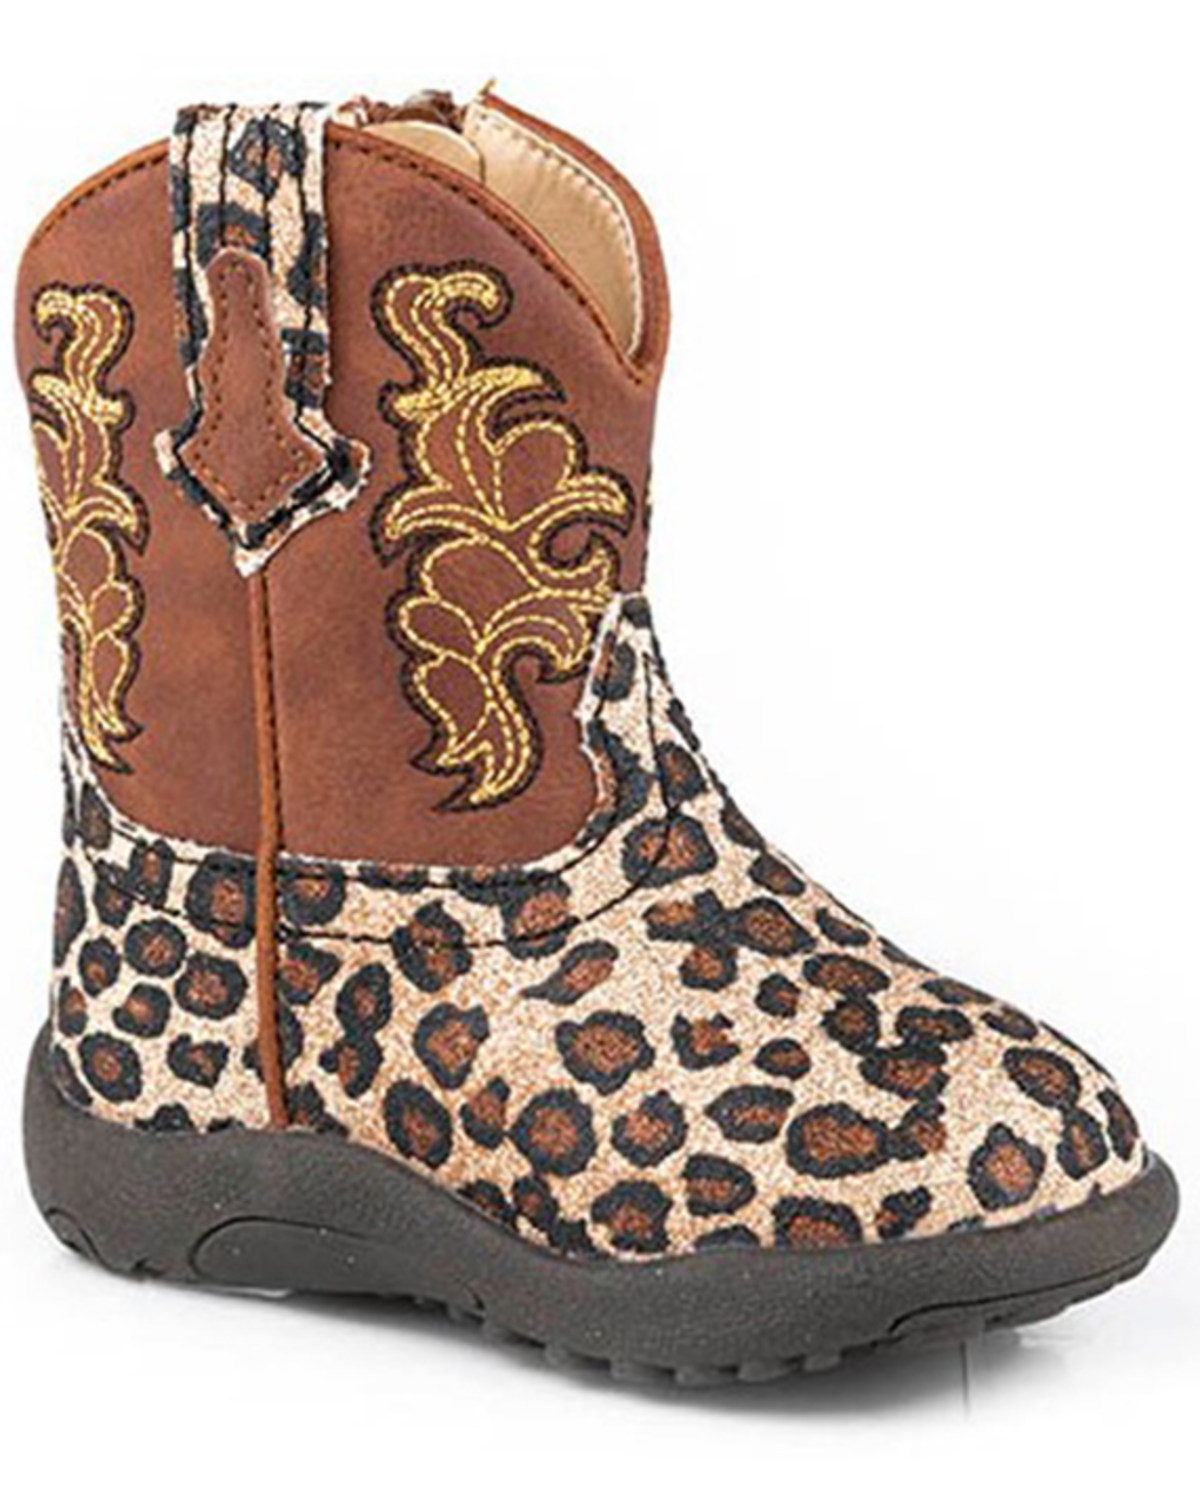 Roper Infant Girls' Glitter Wild Cat Western Boots - Broad Square Toe